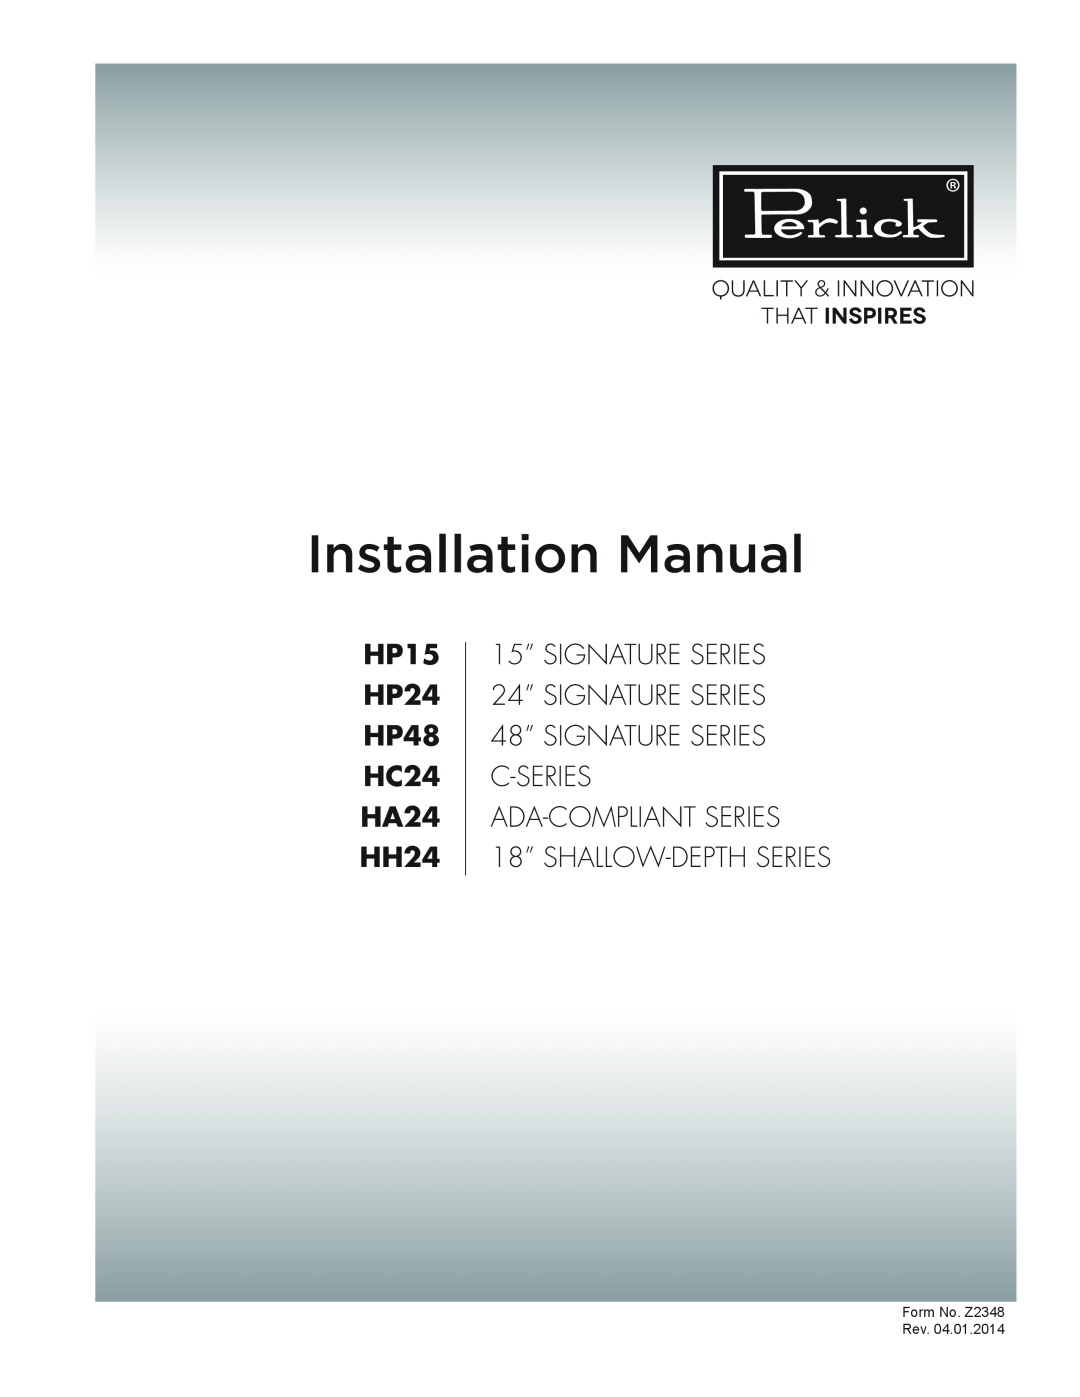 Perlick installation manual Installation Manual, HP15 HP24 HP48 HC24 HA24 HH24 